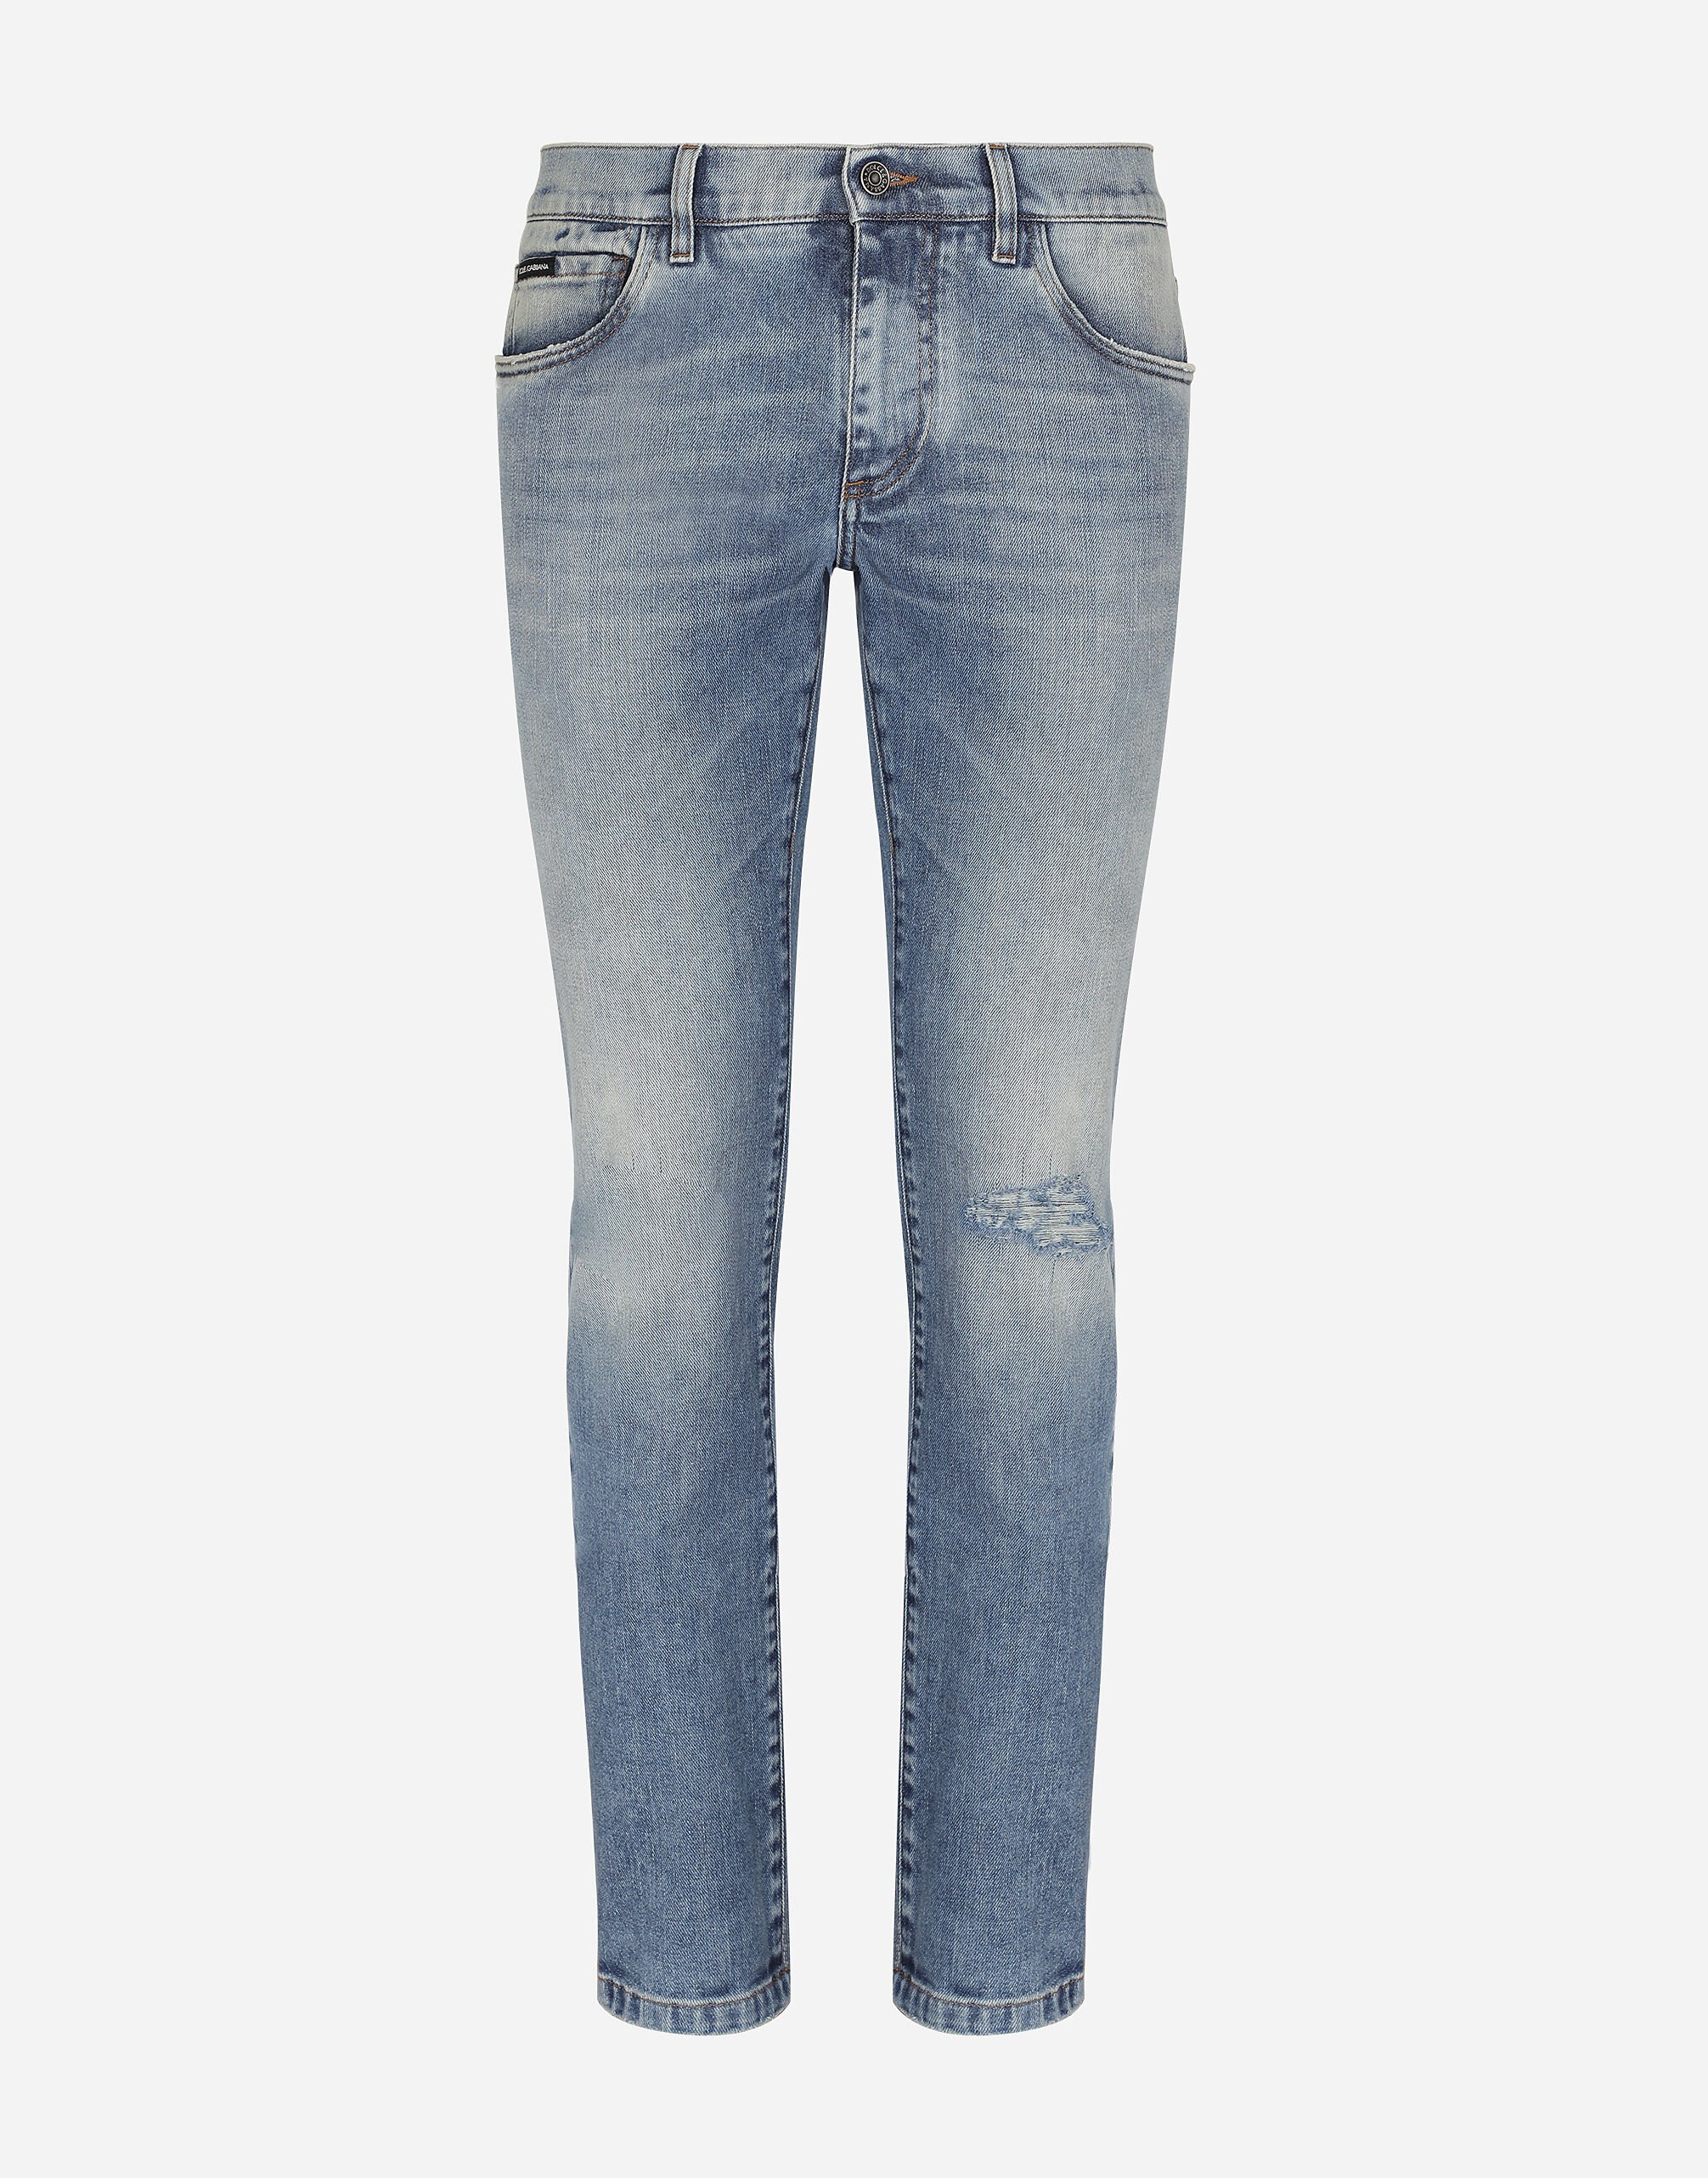 Dolce & Gabbana Light blue skinny stretch jeans with rips Multicolor G9WW1DGF569